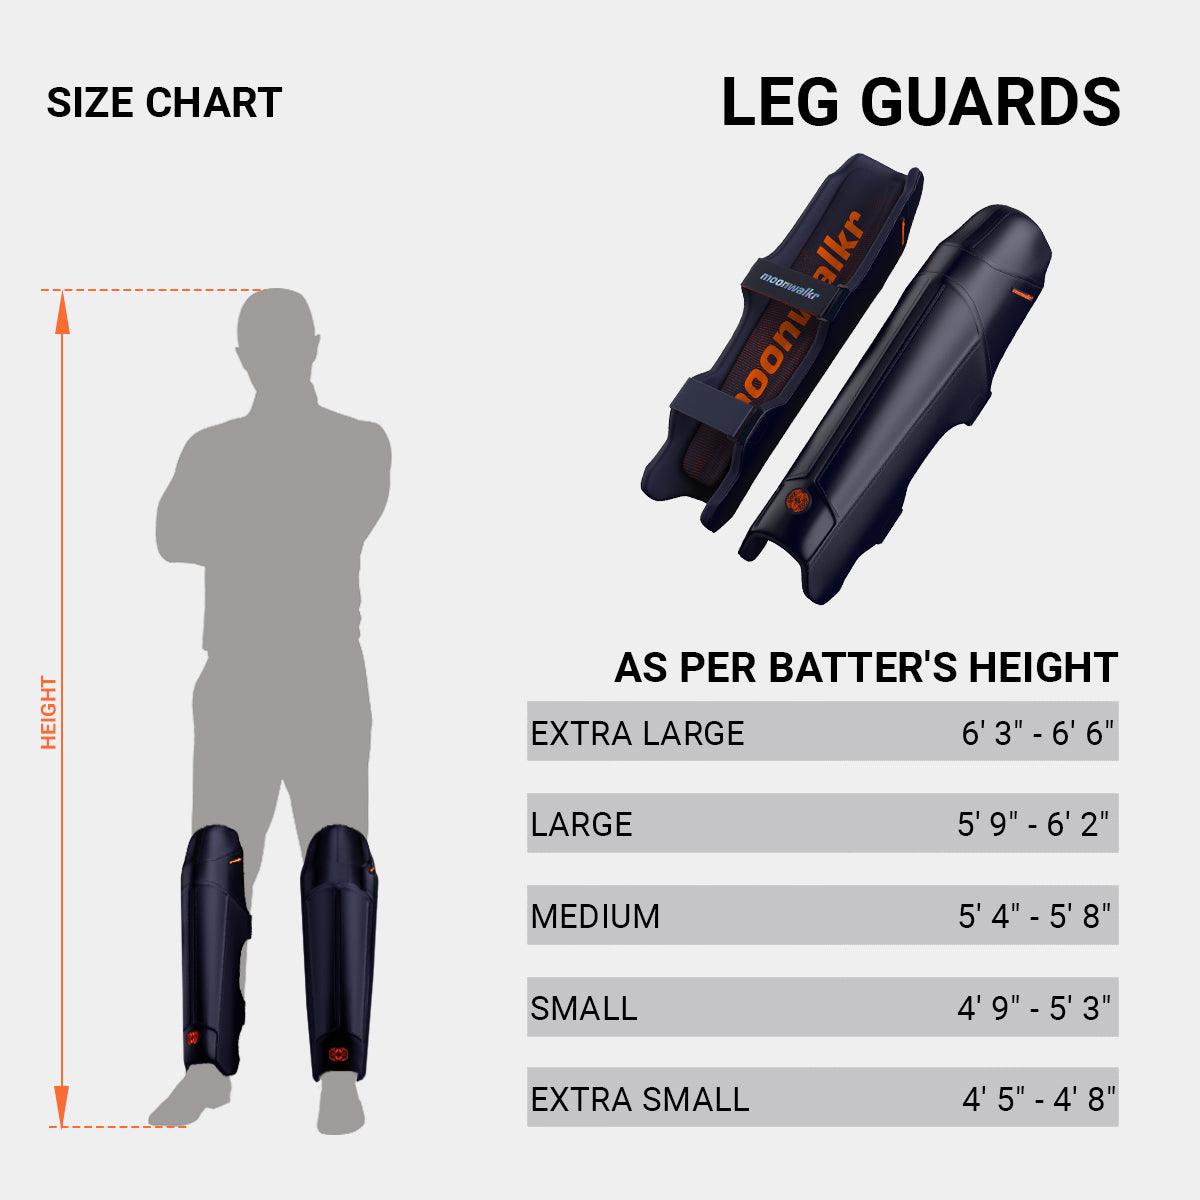 Leg Guards 2.0 moonwalkrindia